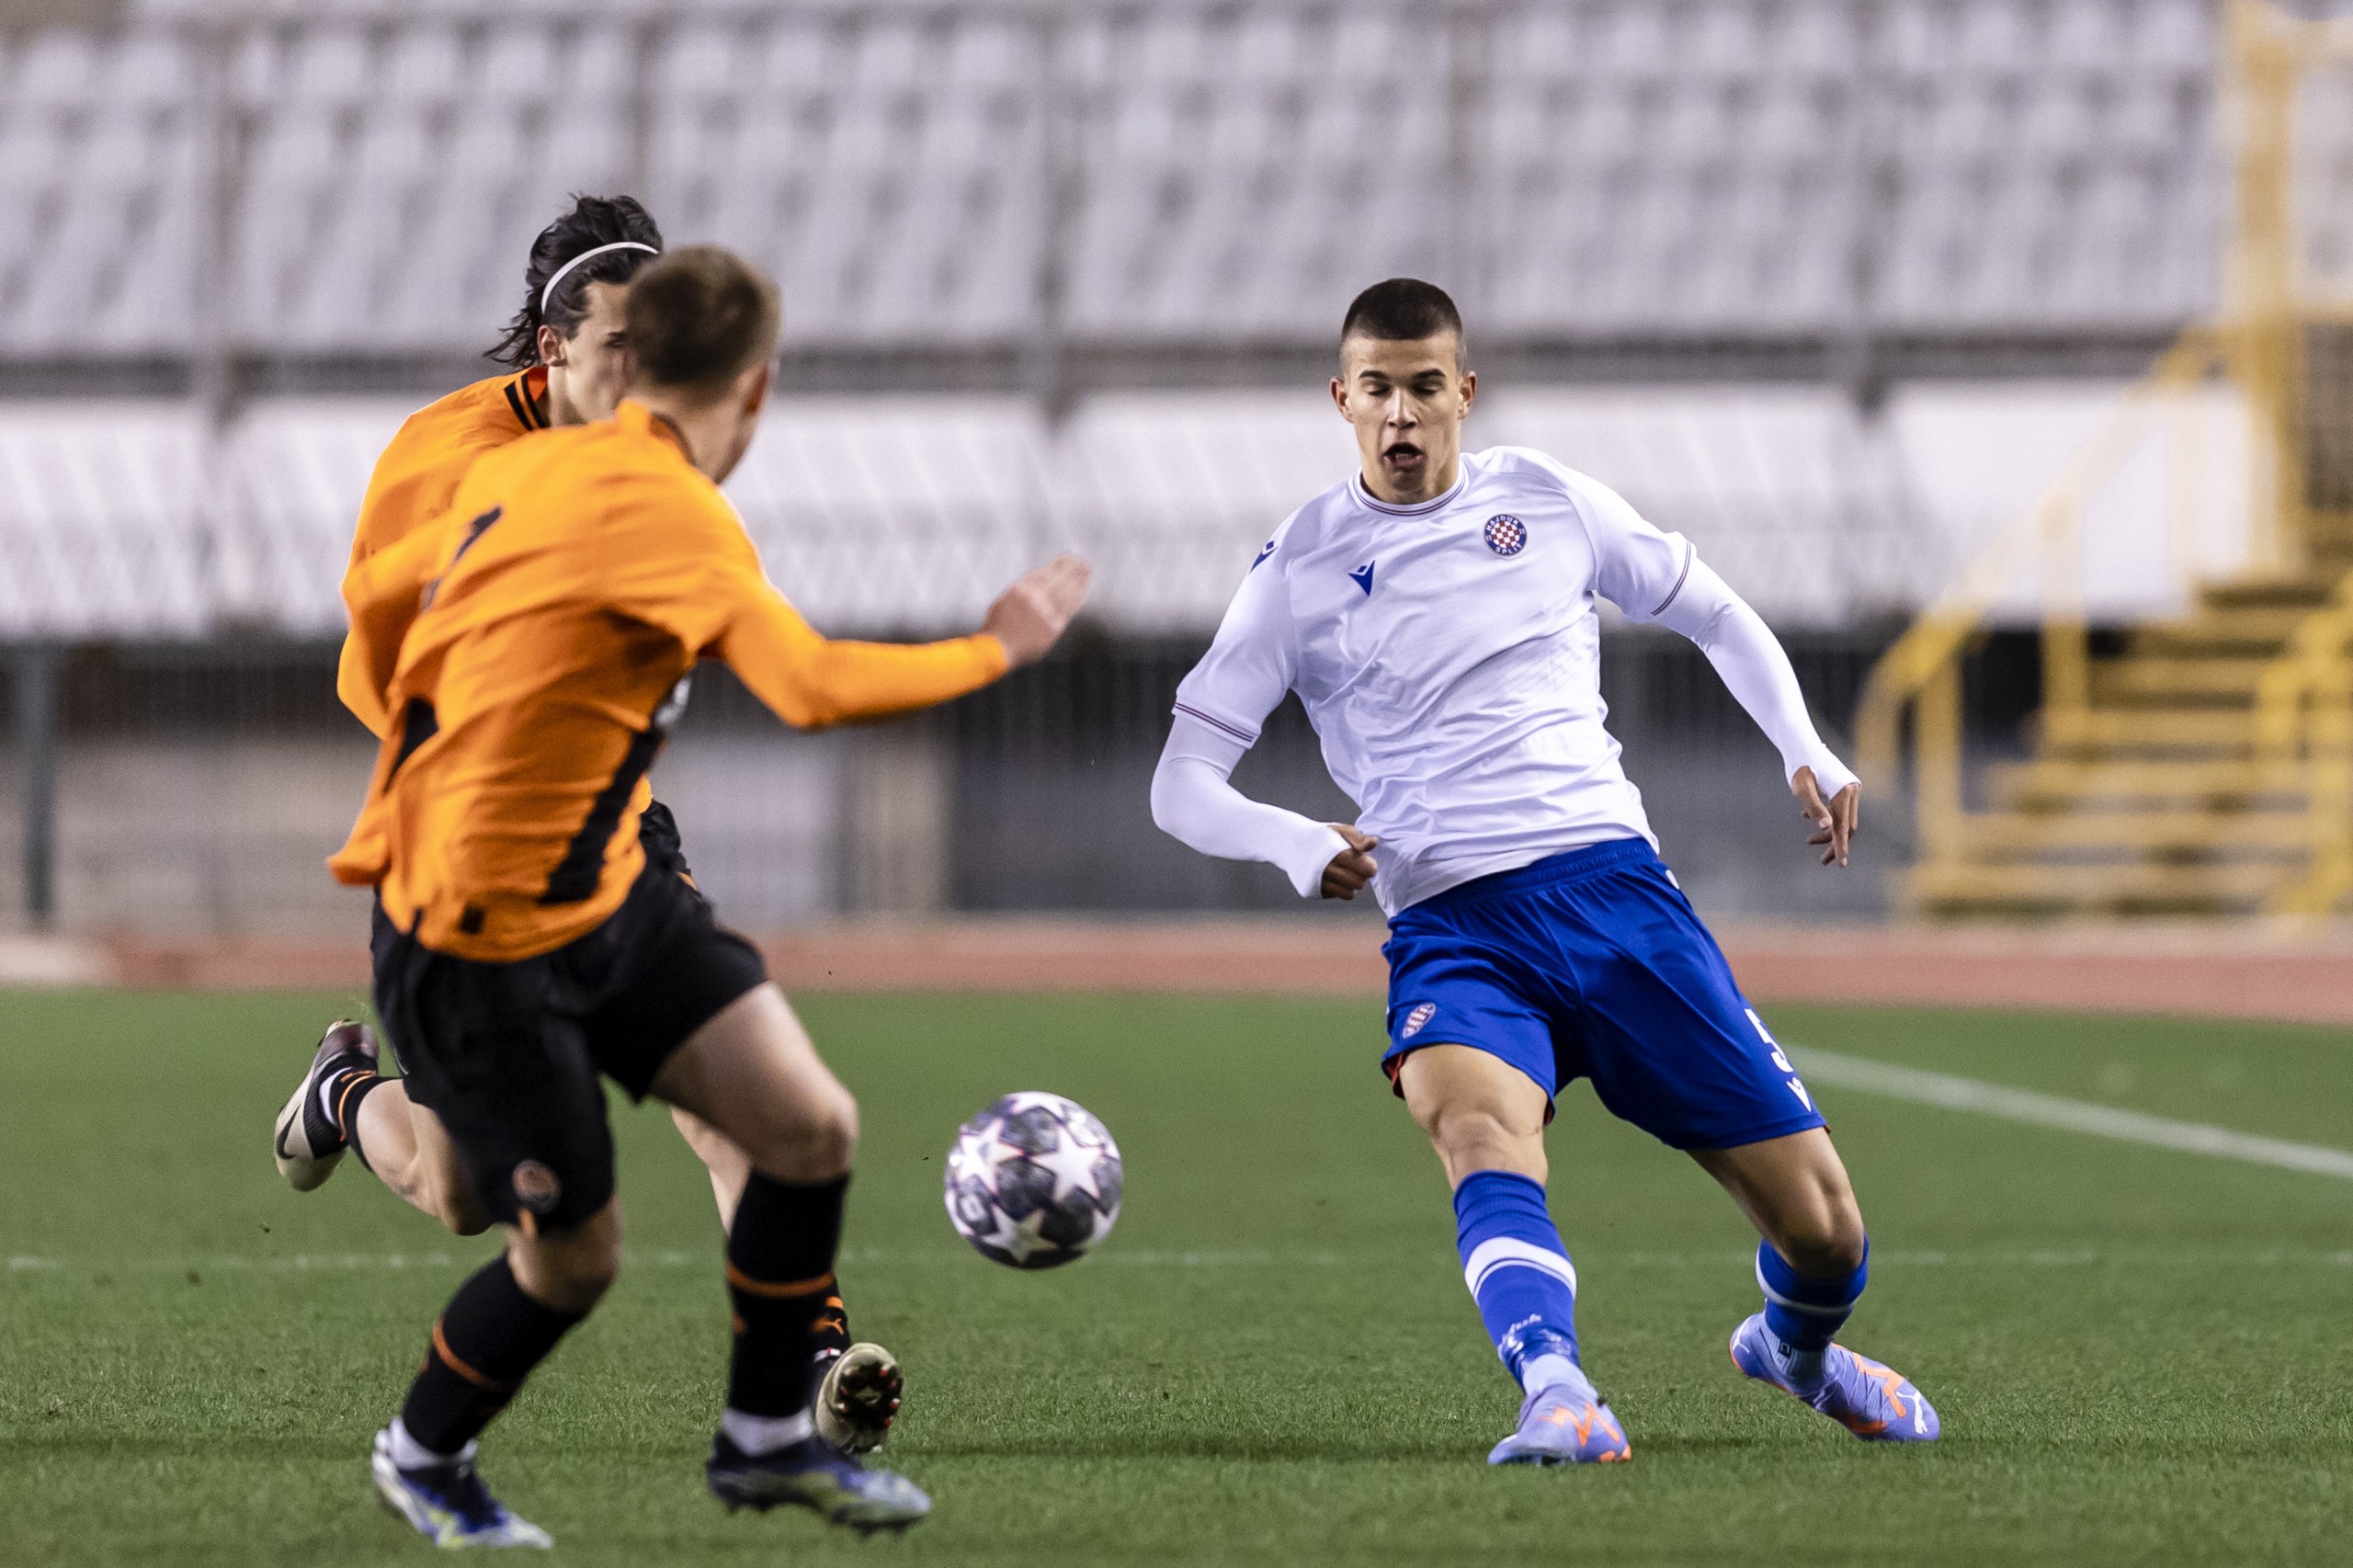 Hajduk Split U19 1-0 Shakhtar U19 - Luka Vuskovic 82' : r/soccer